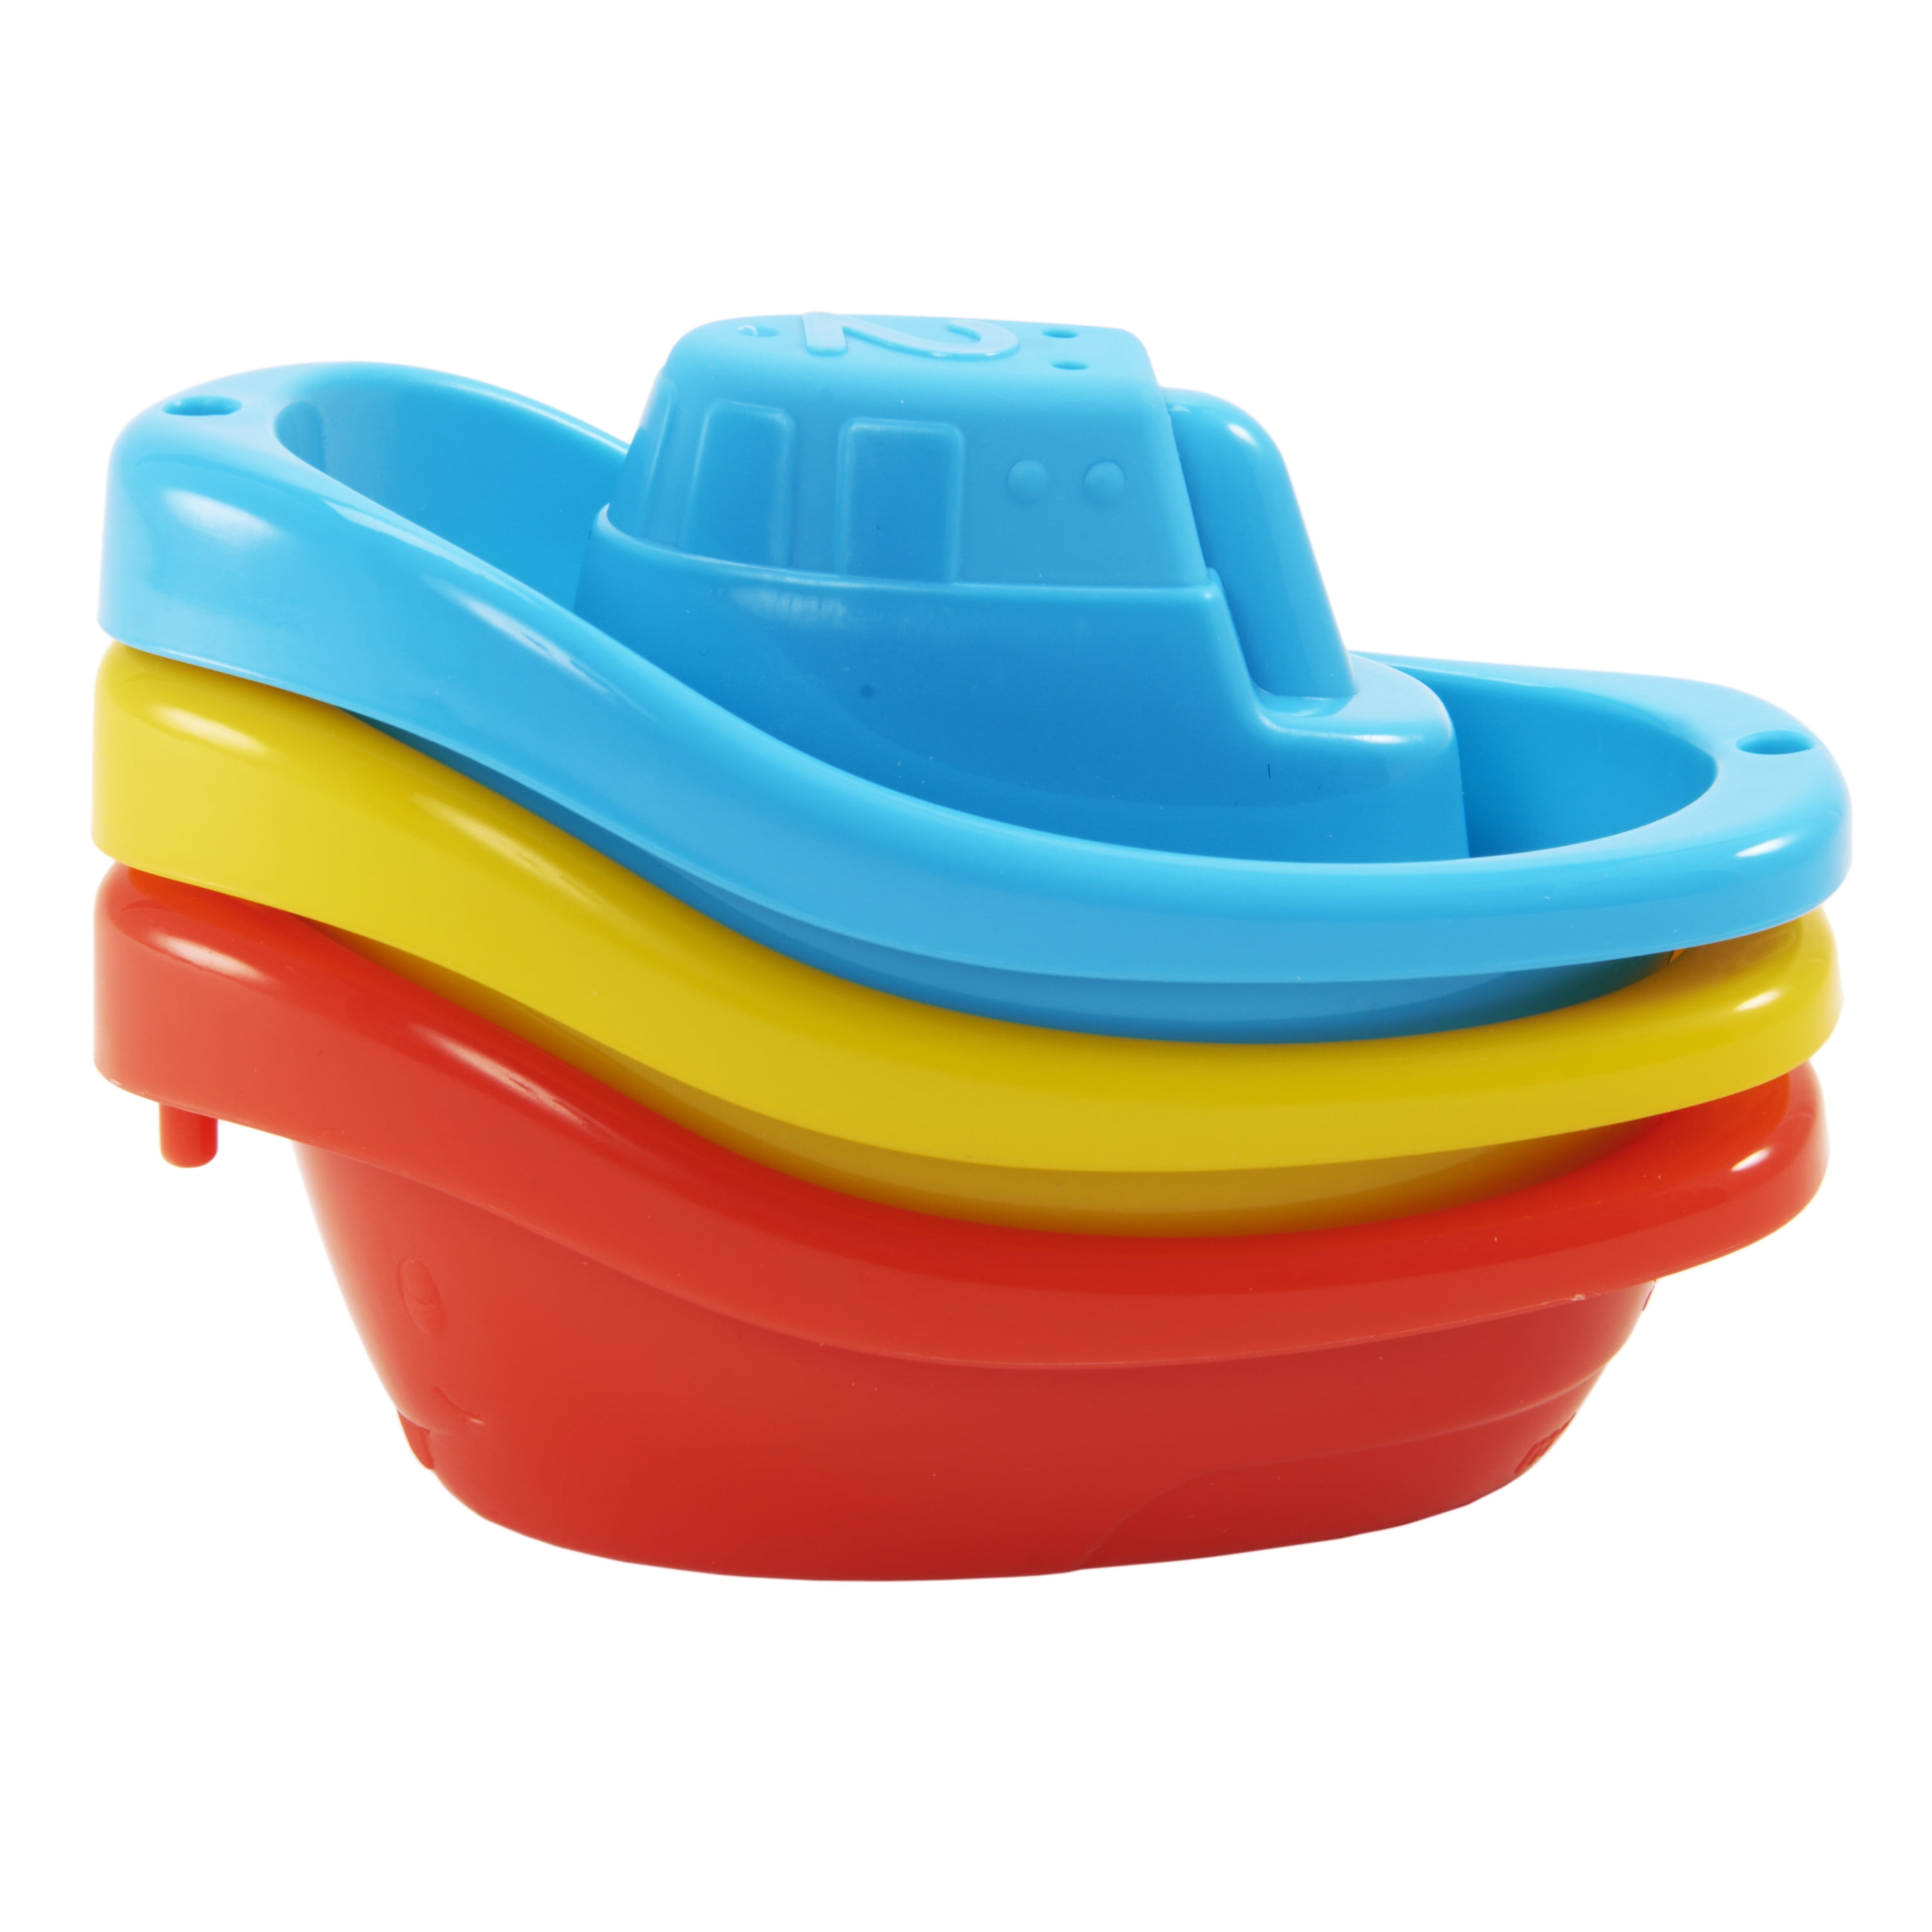 Munchkin Little Boat Train Bath Toy, 3 Pack, Assorted - Walmart